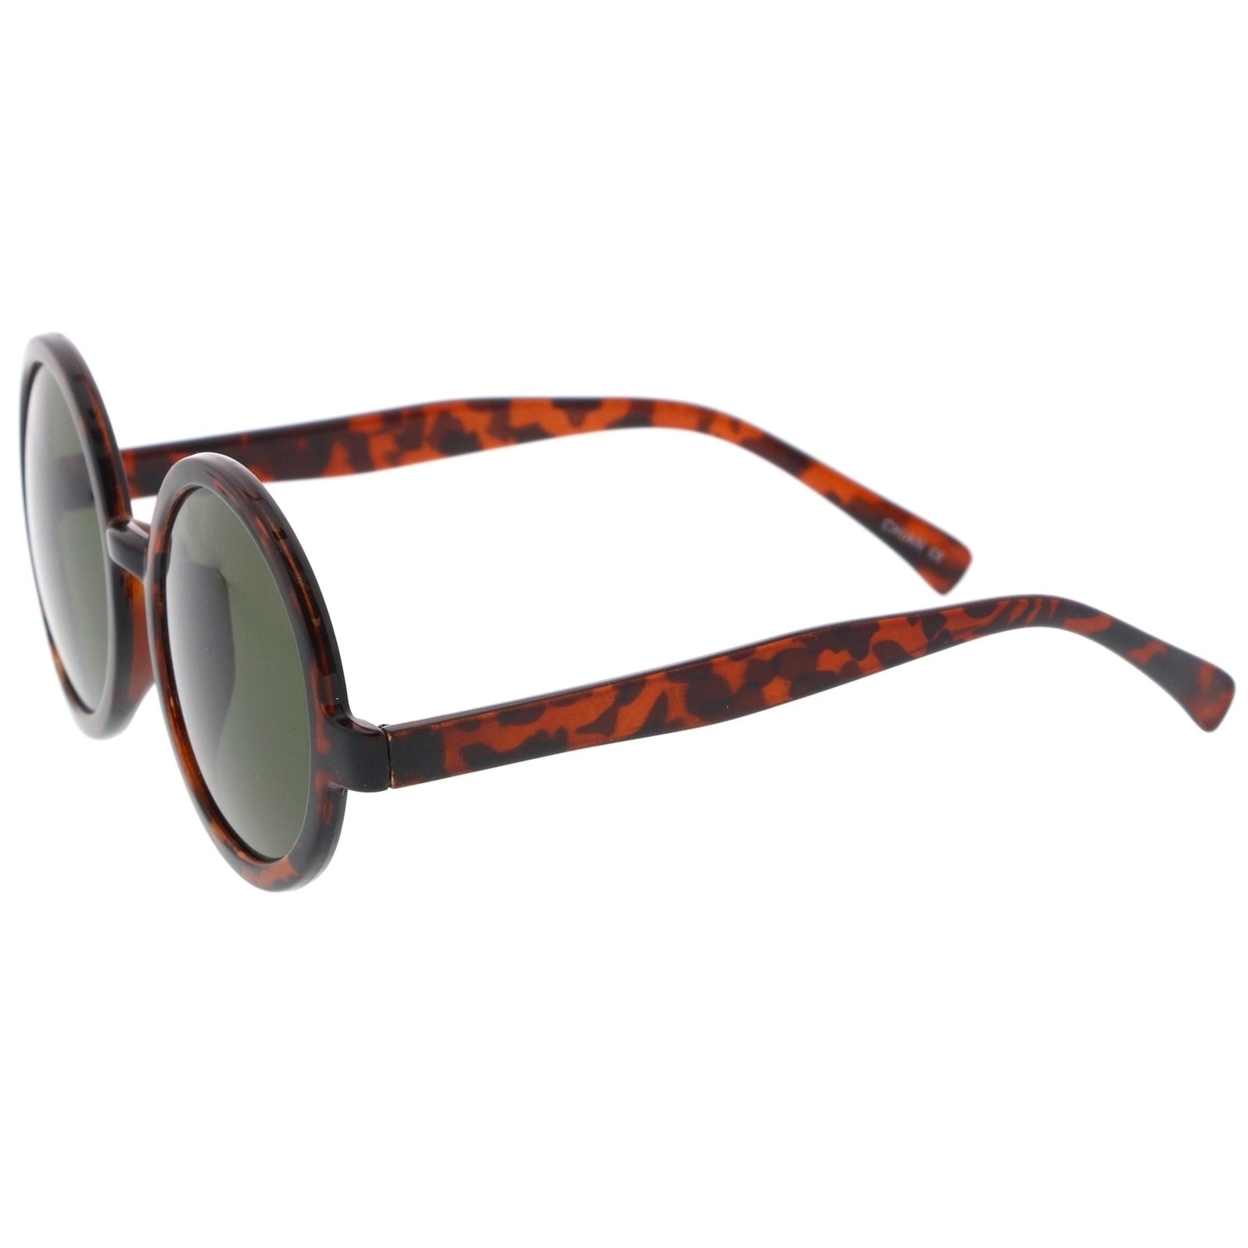 Classic Retro Horn Rimmed Neutral-Colored Lens Round Sunglasses 52mm - Black / Smoke